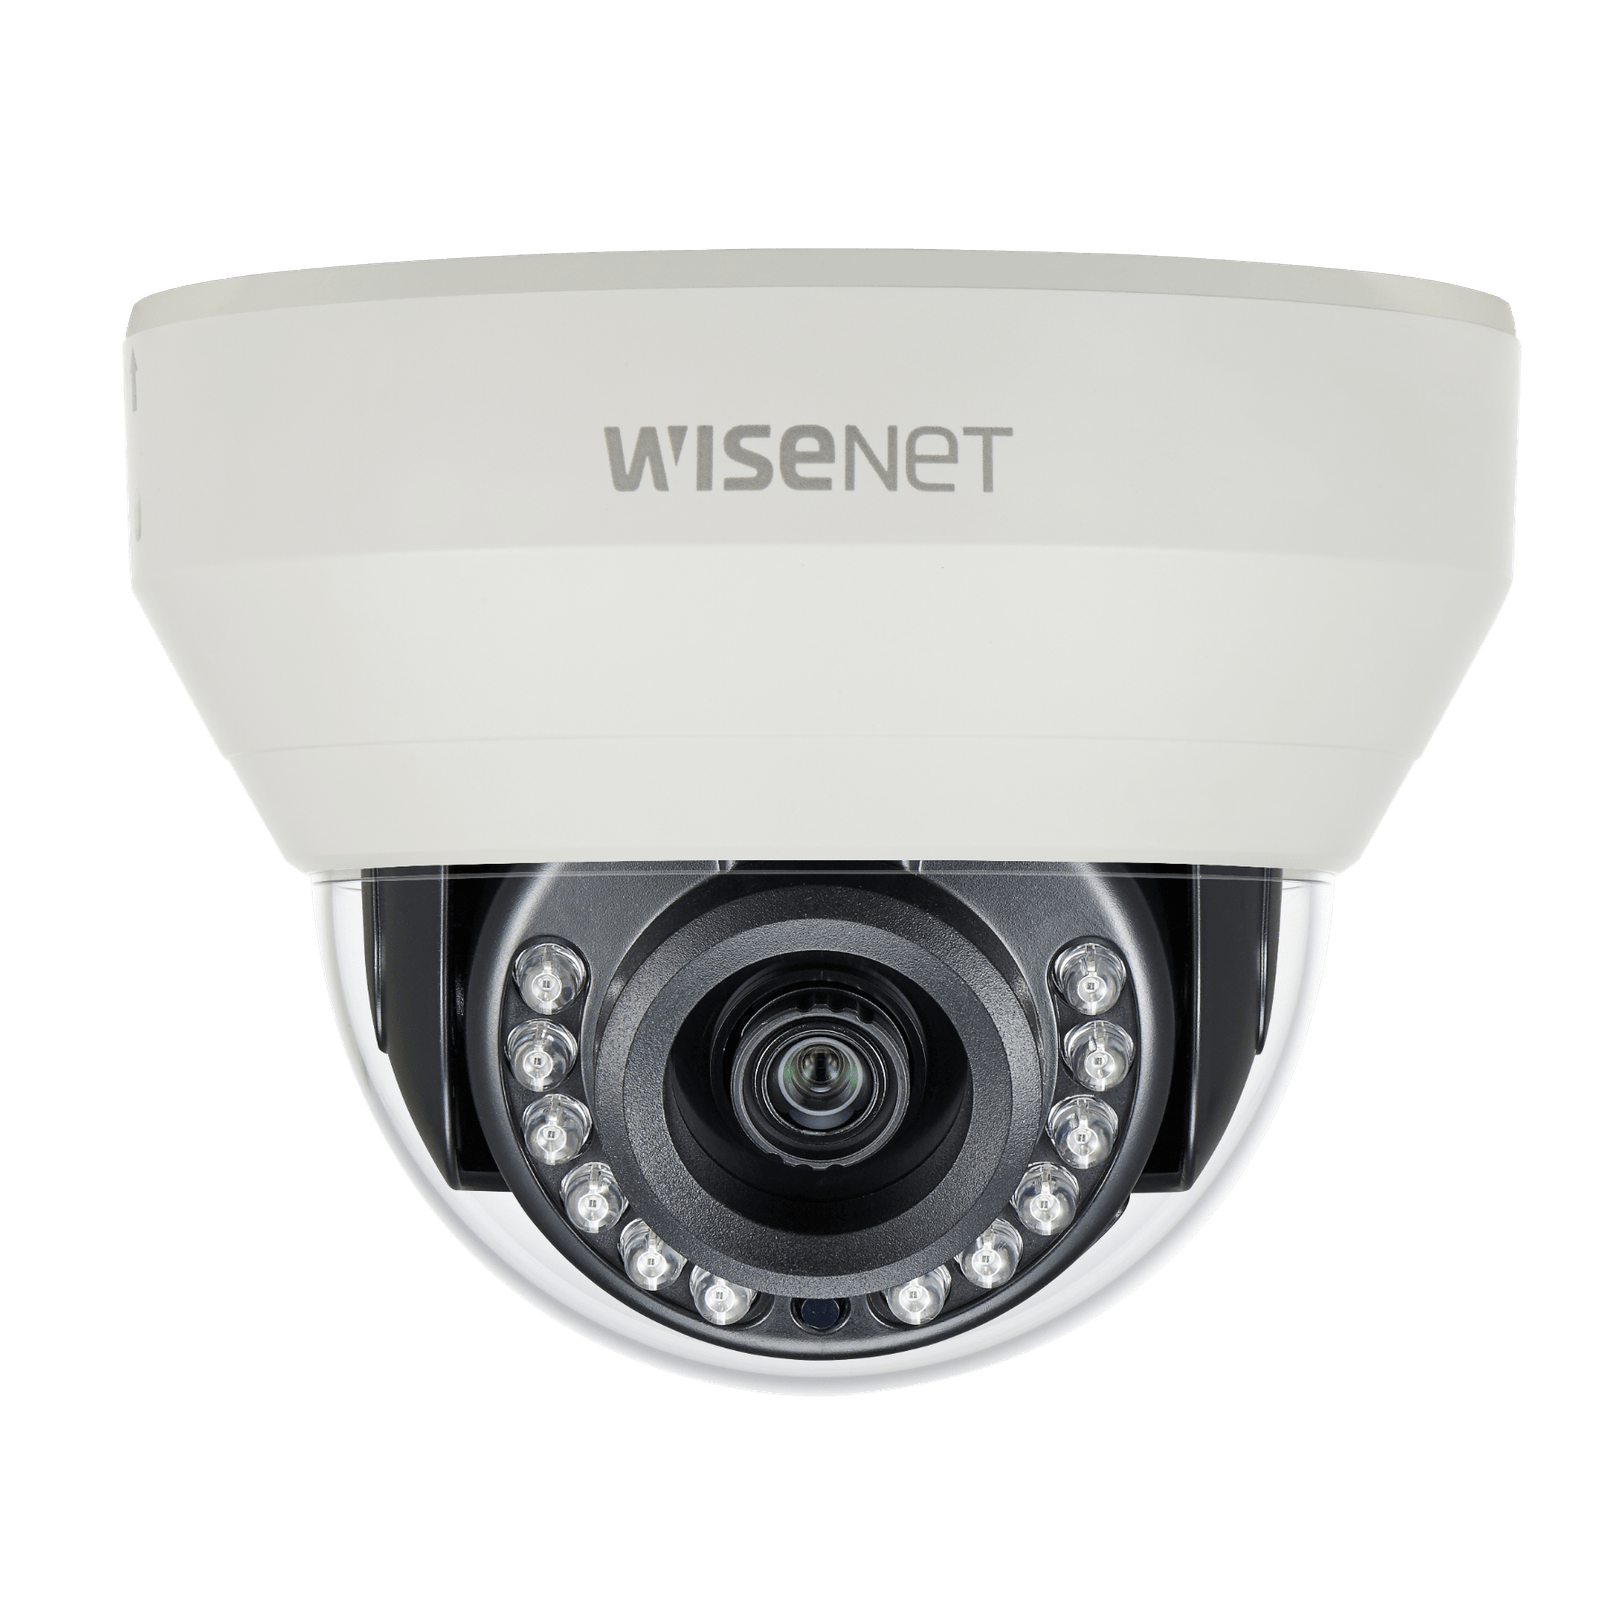 HCD-7020RA Dome Security Camera